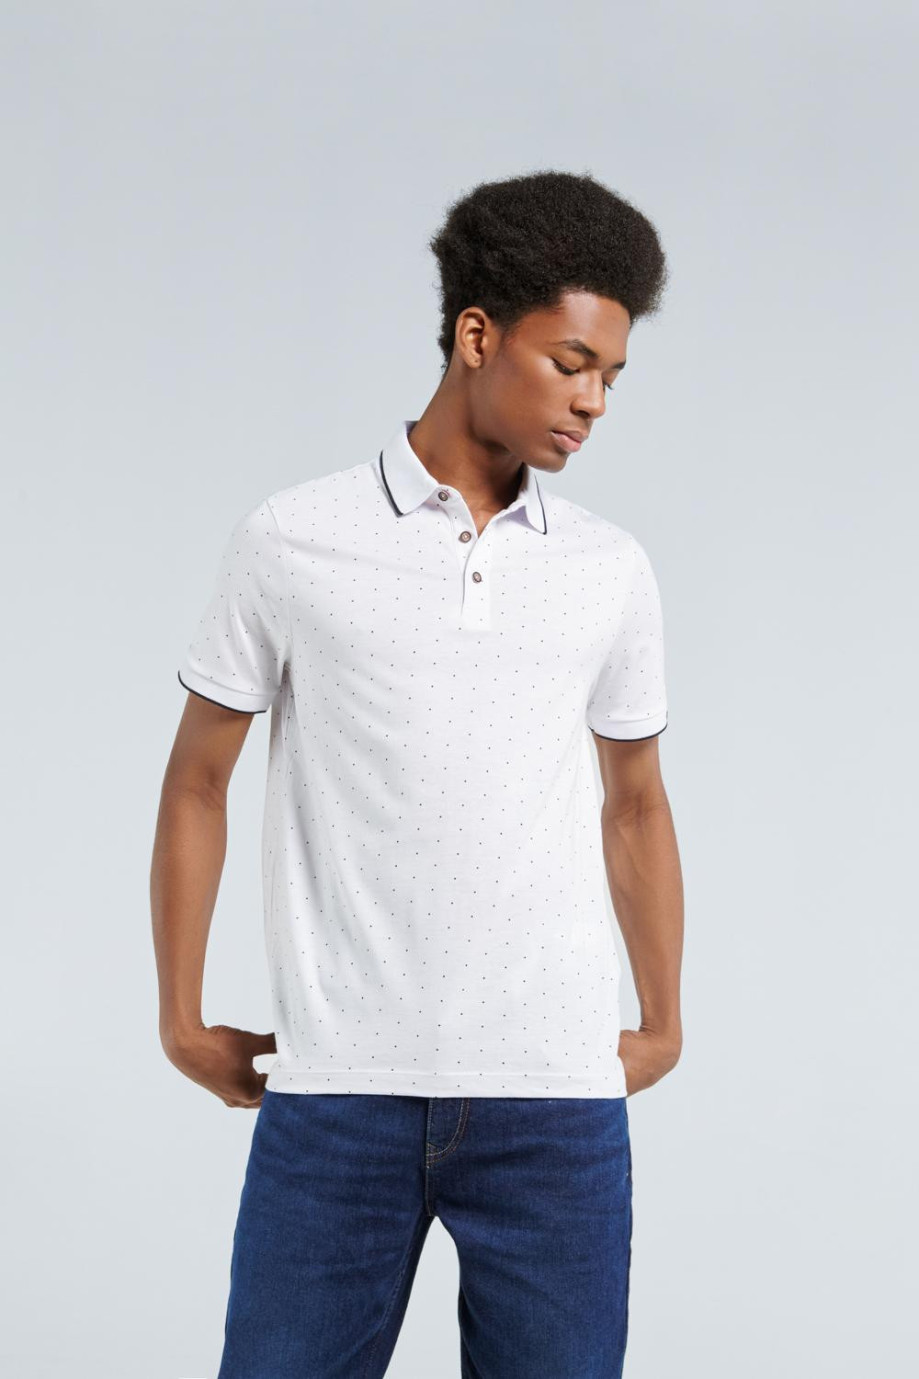 Camiseta blanca tipo polo con puntos negros y manga corta